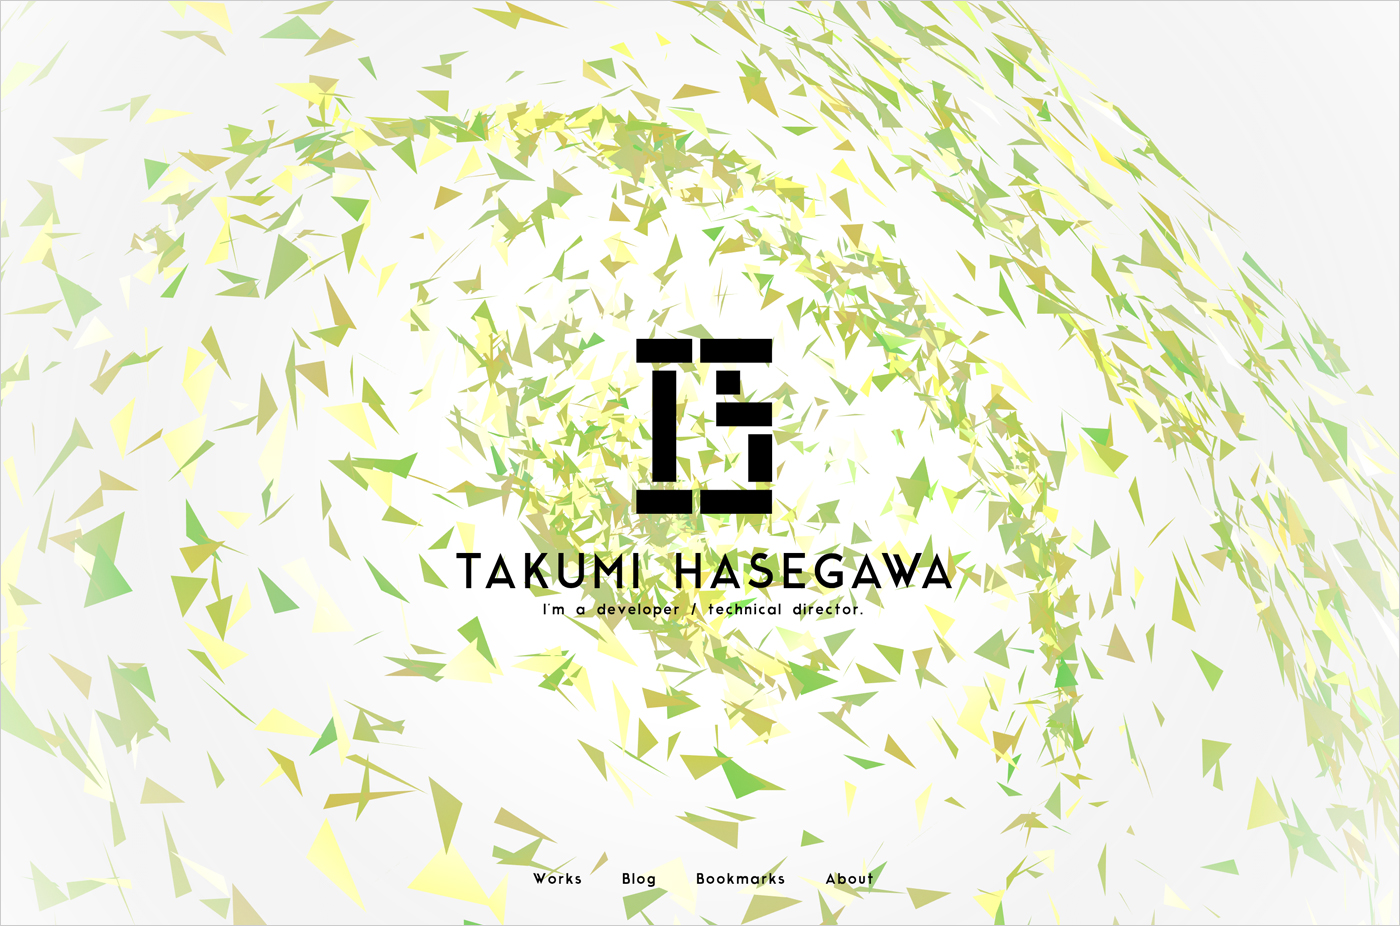 Takumi Hasegawaウェブサイトの画面キャプチャ画像